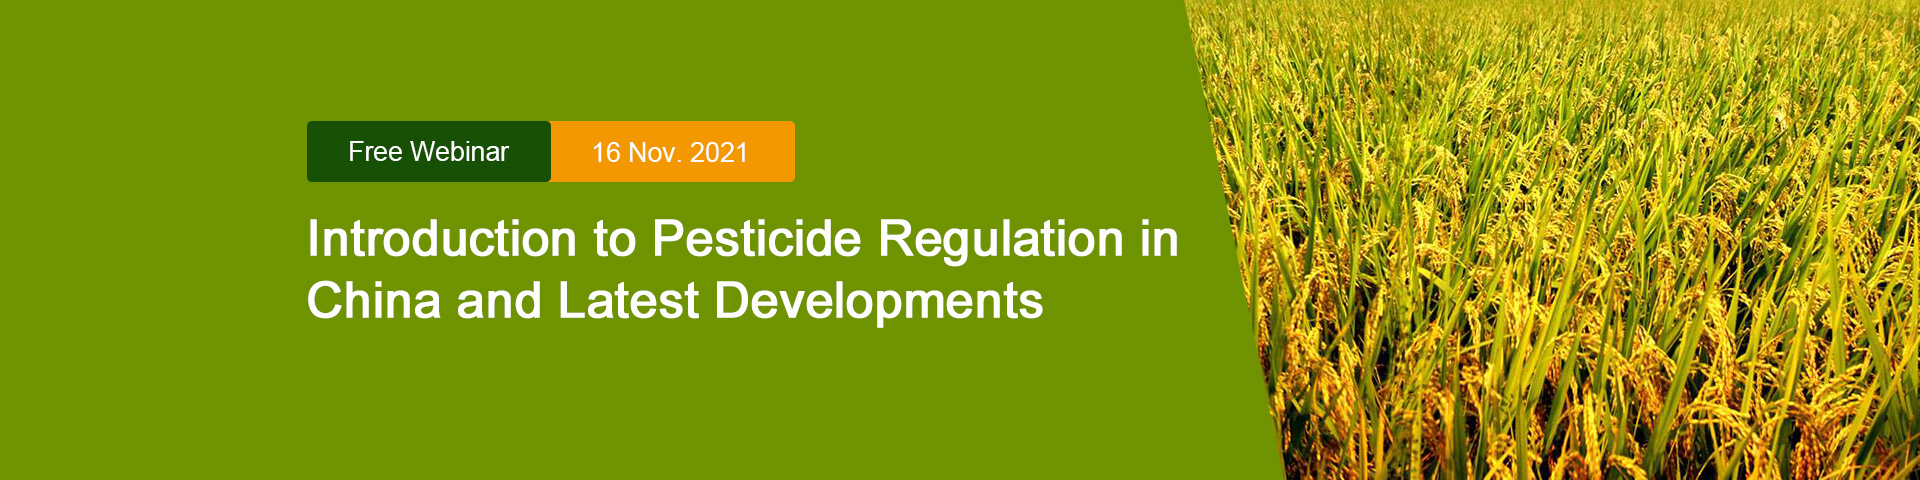 Agrochemical,Webinar,China,Pesticide,Regulation